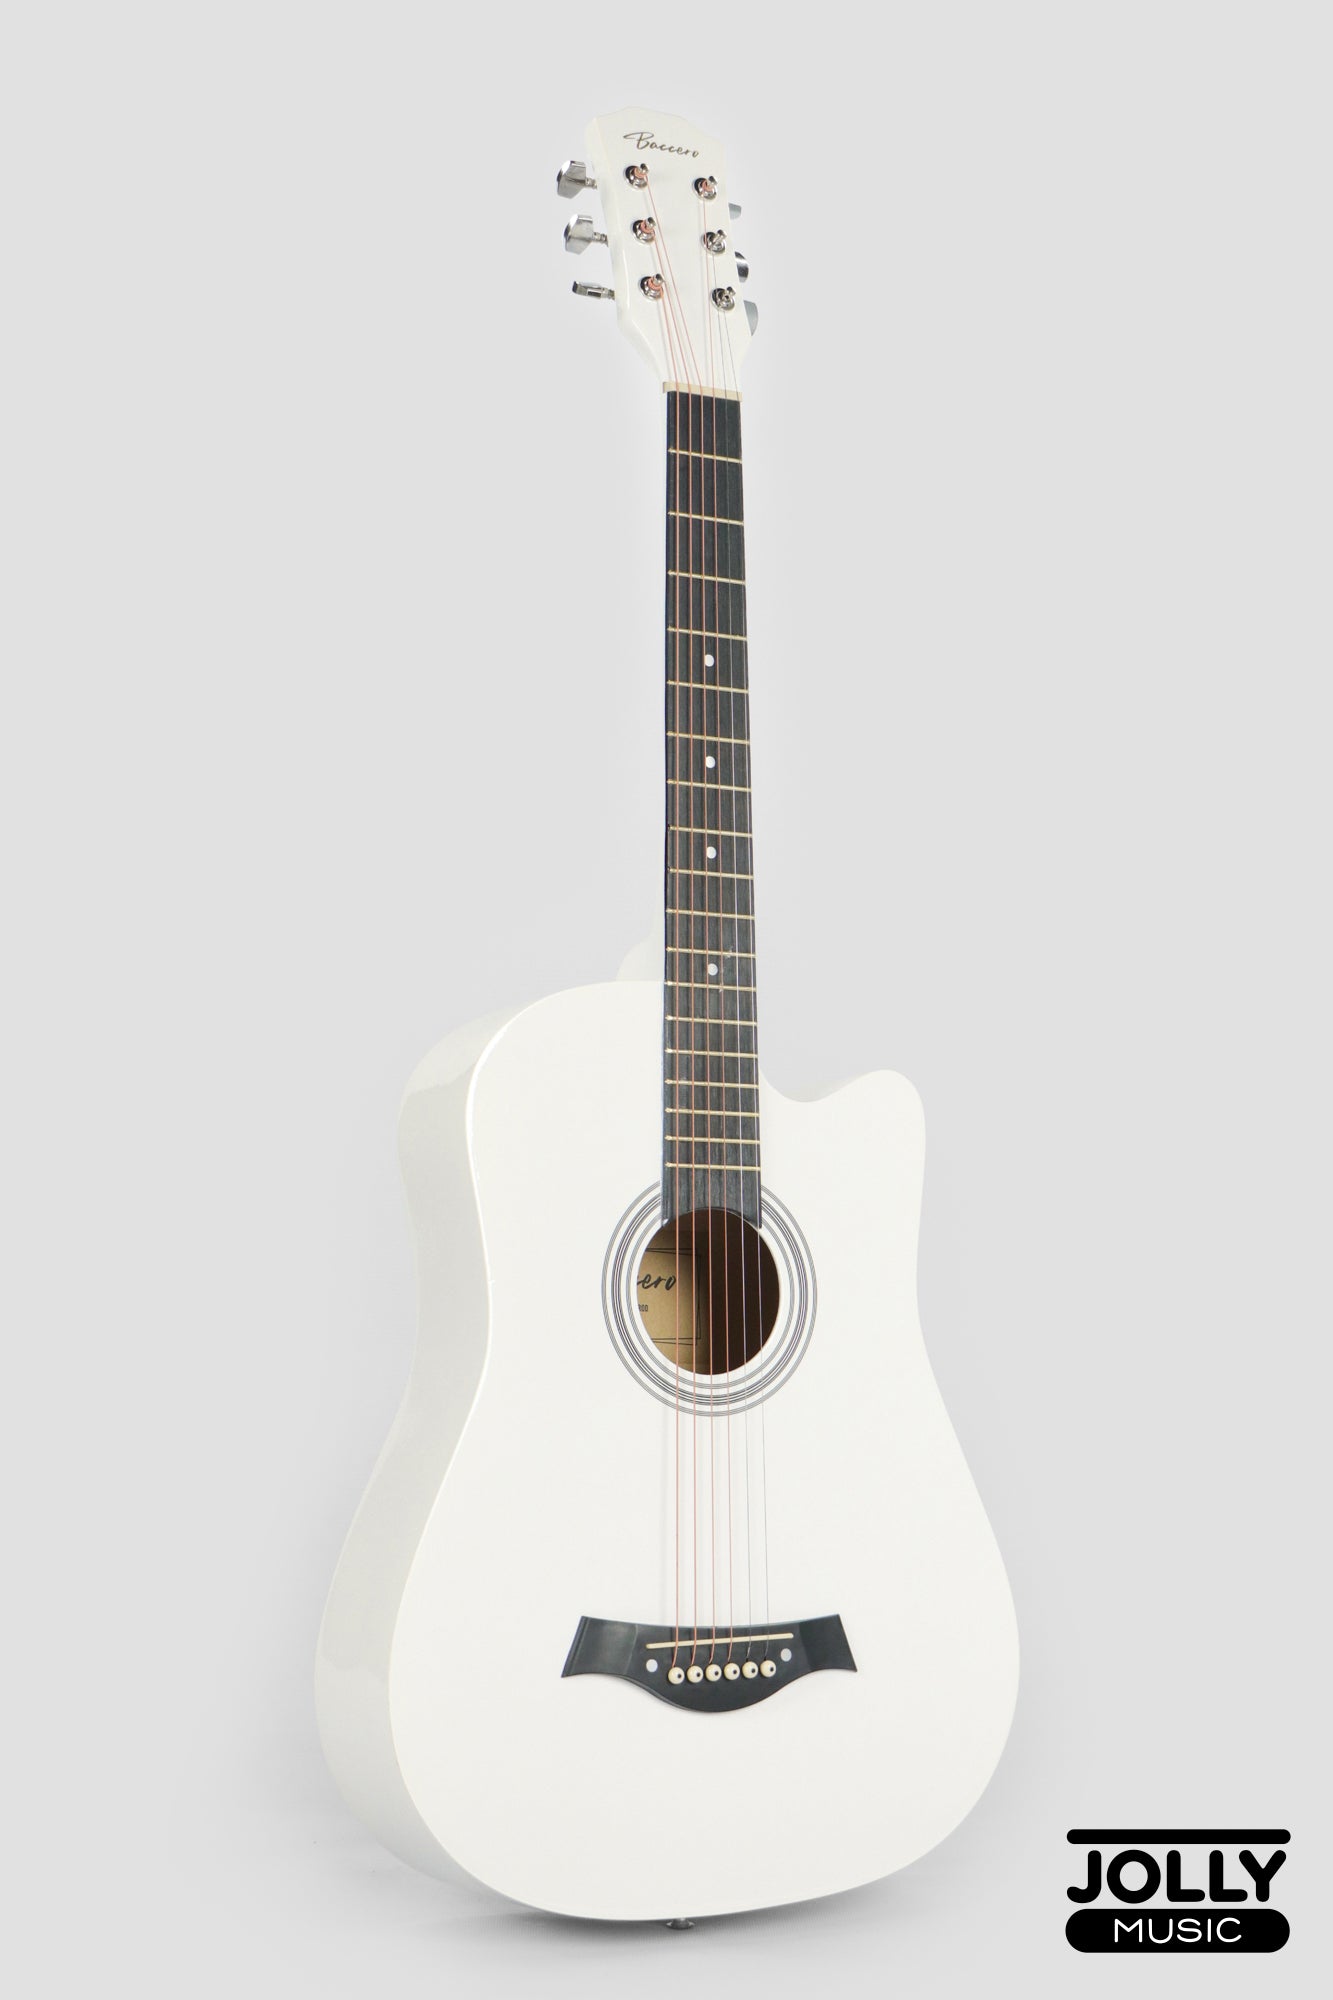 Baccero 38" Guitar K-38LT Truss Rod w/ Case, 3 Picks, Tuner, Capo - White